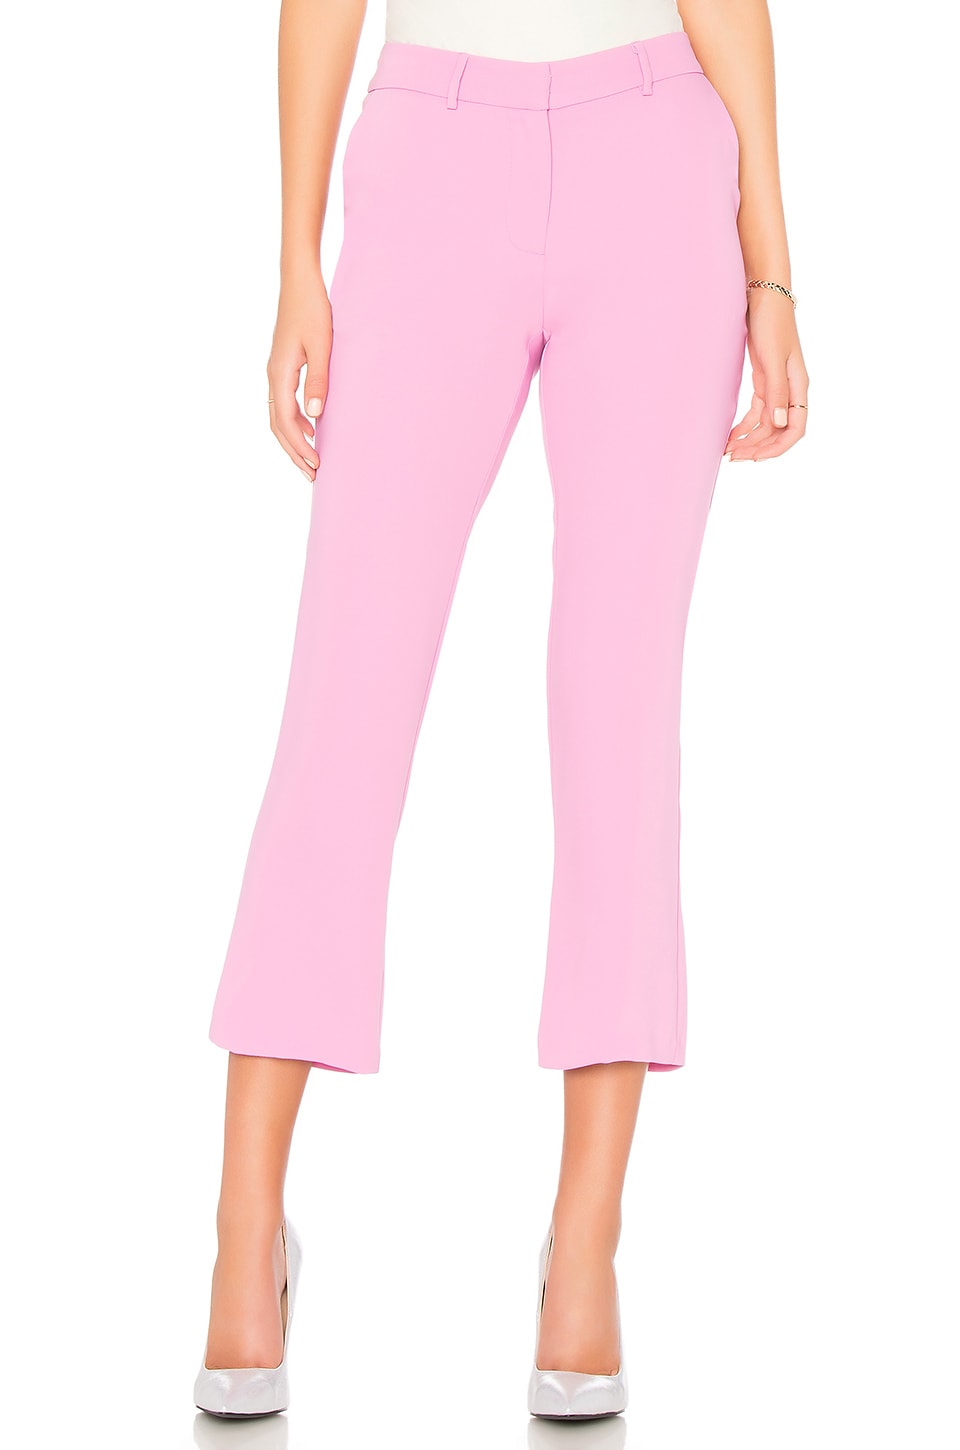 Amanda Uprichard X REVOLVE Crop Pant in Sweet Pink | REVOLVE